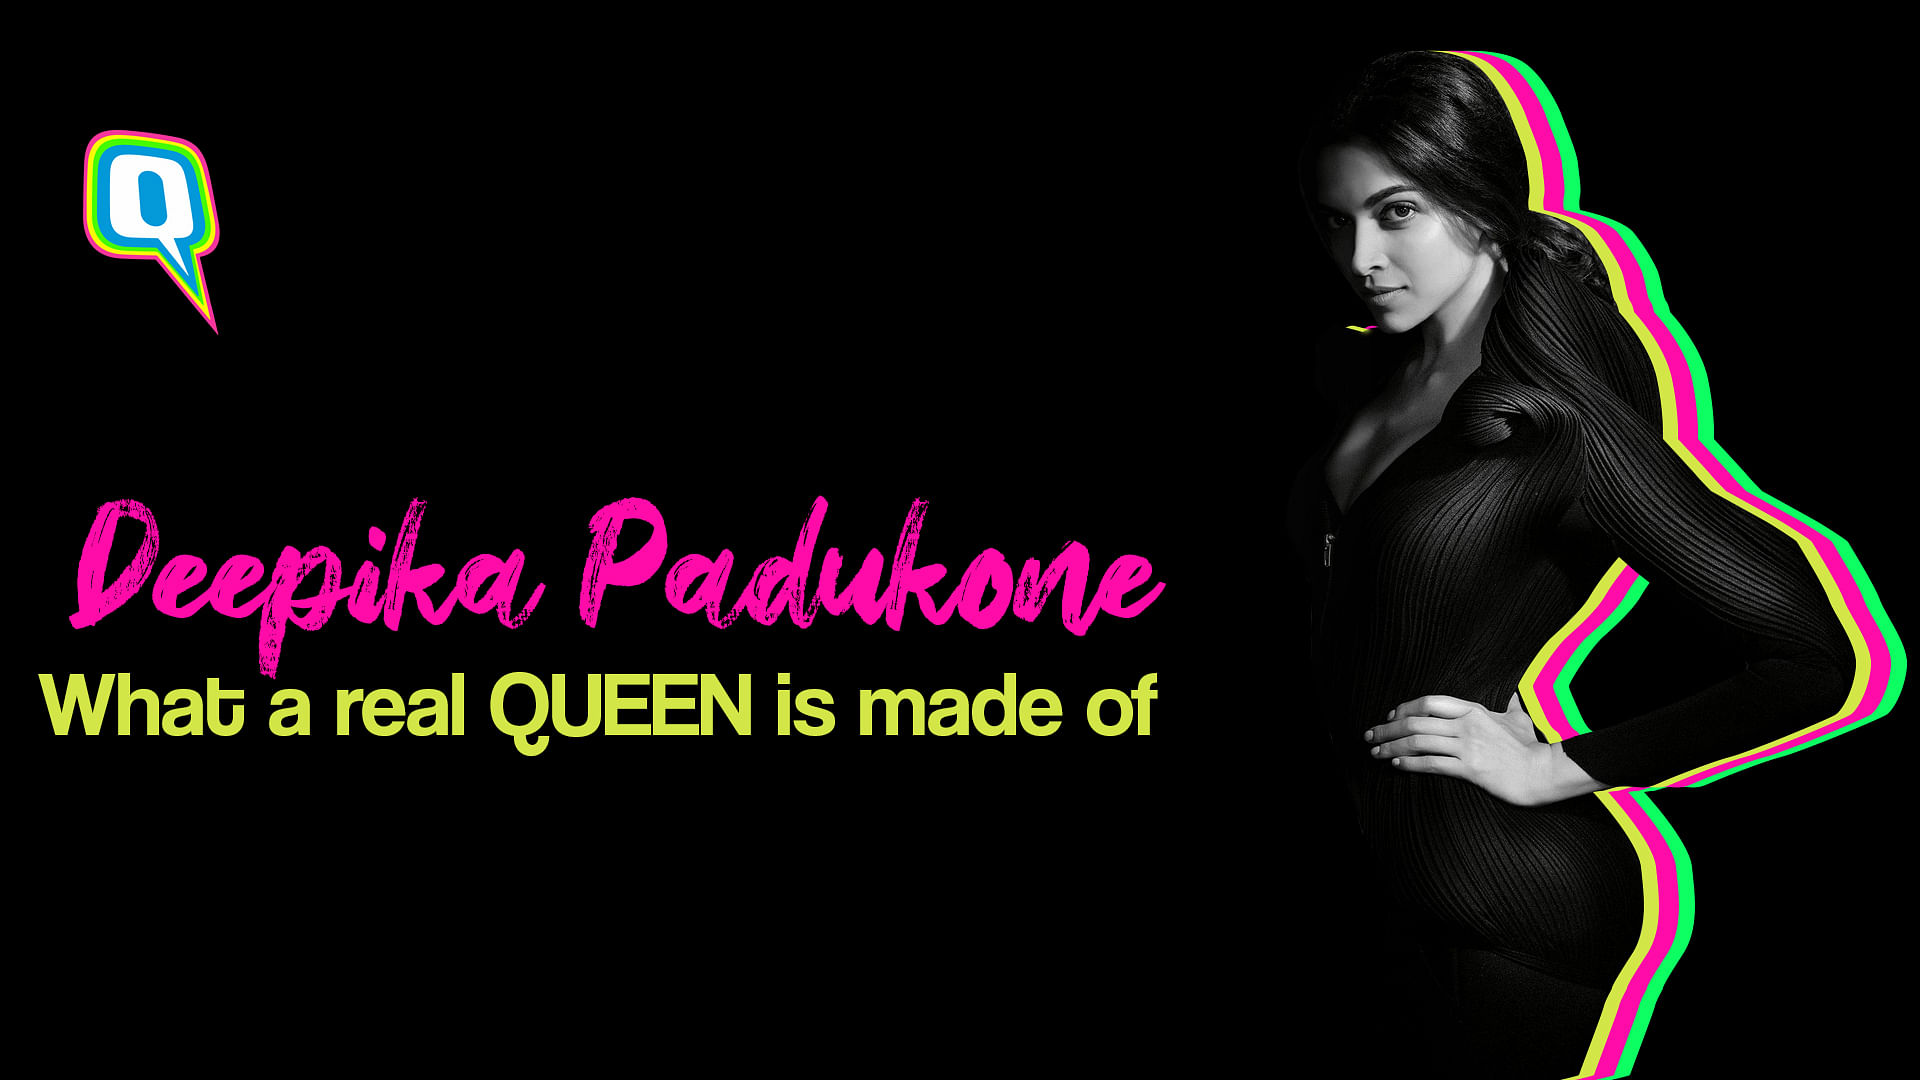 Deepika Padukone: the epitome of grace. 